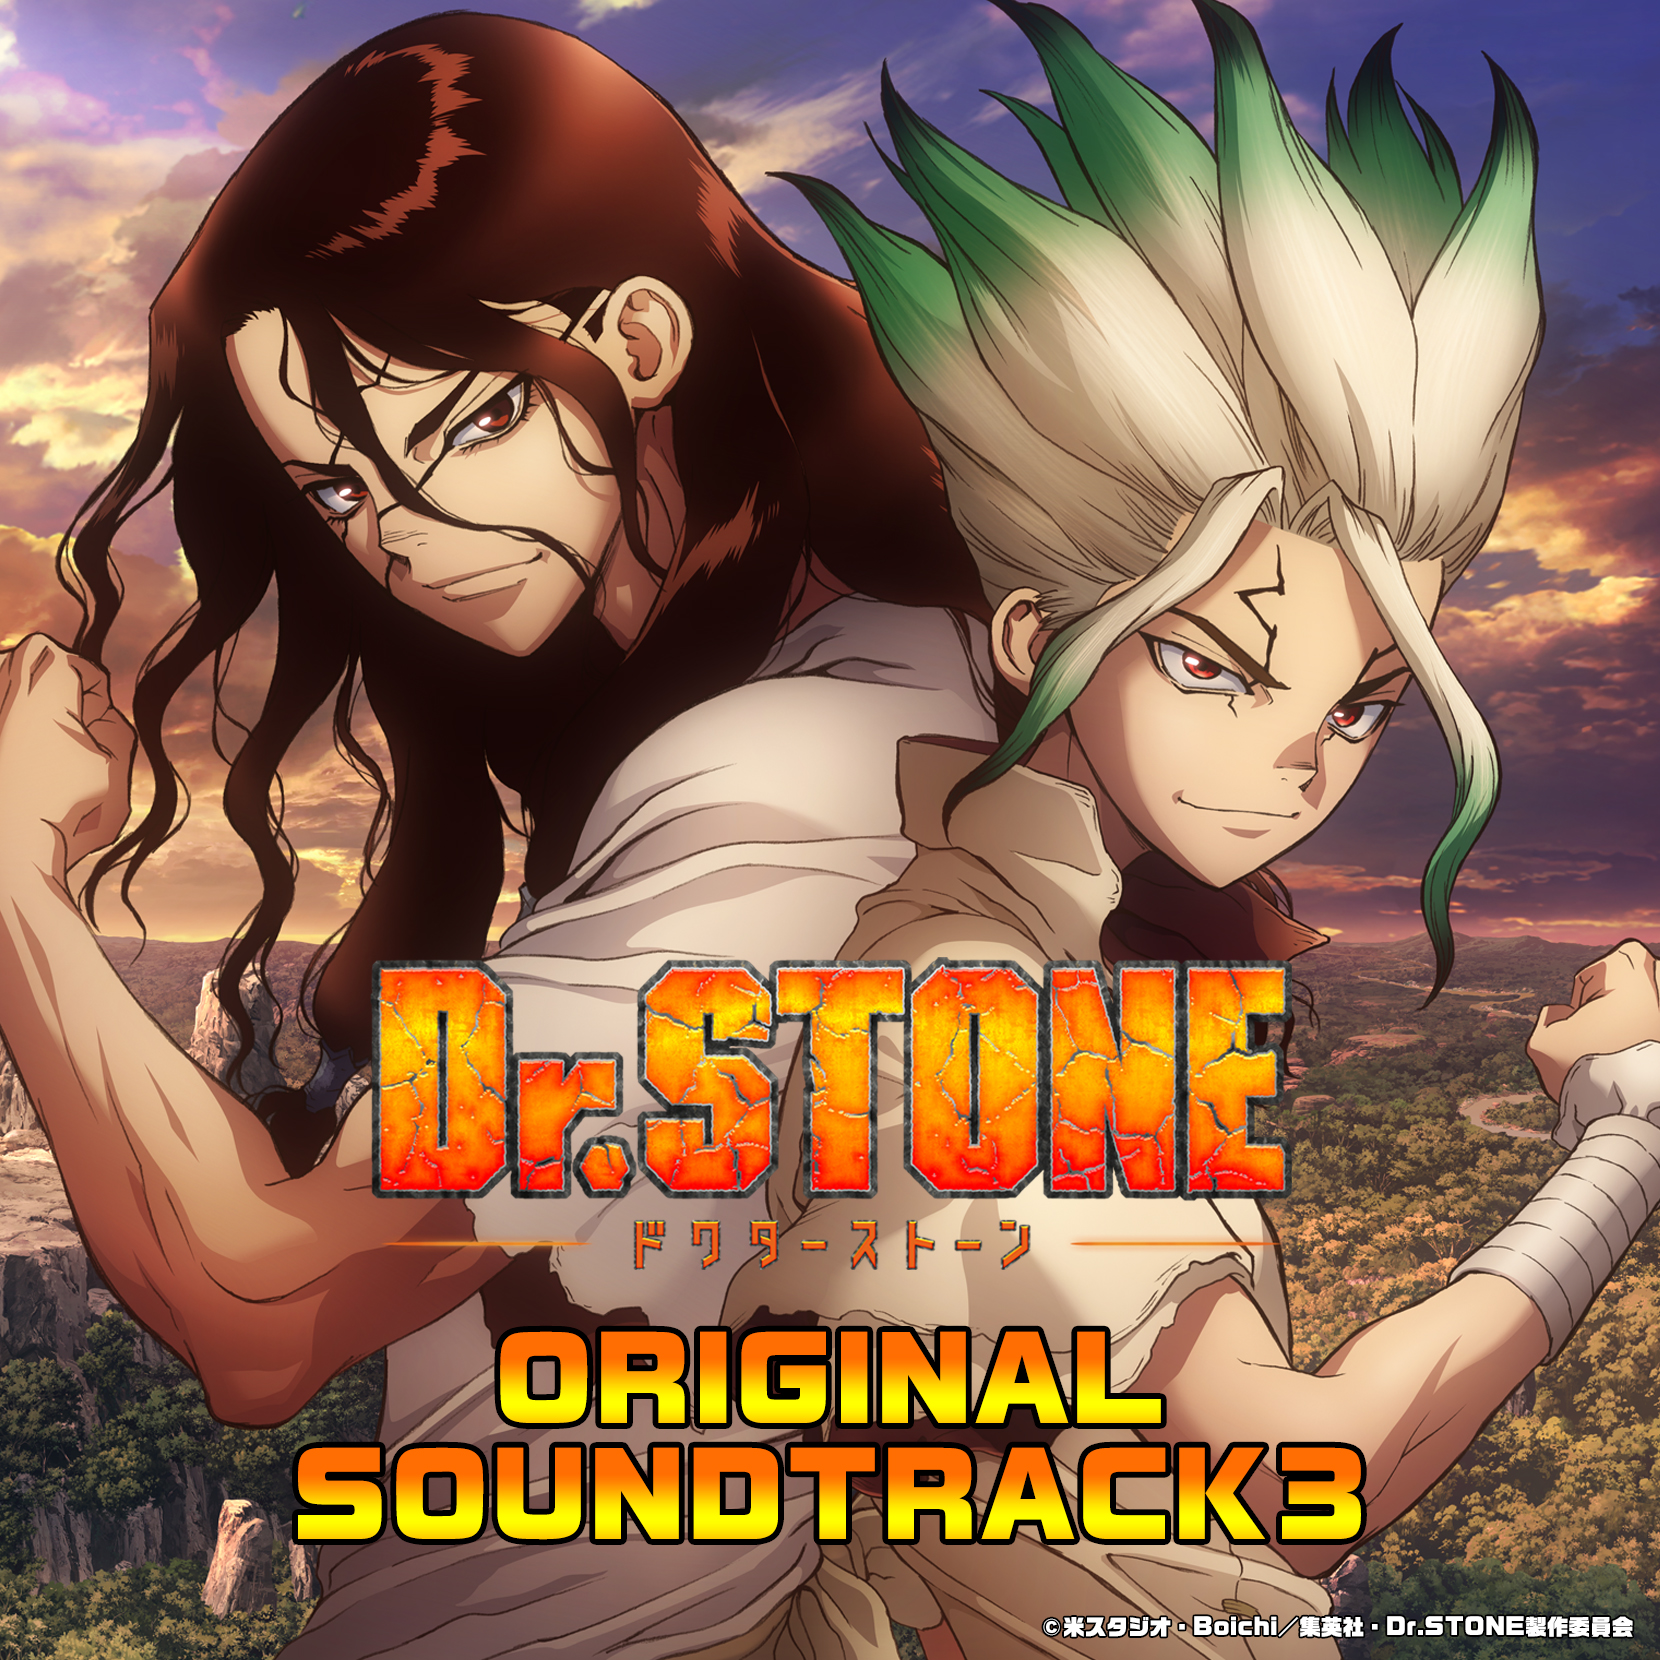 TVアニメ「Dr.STONE」 オリジナルサウンドトラック3